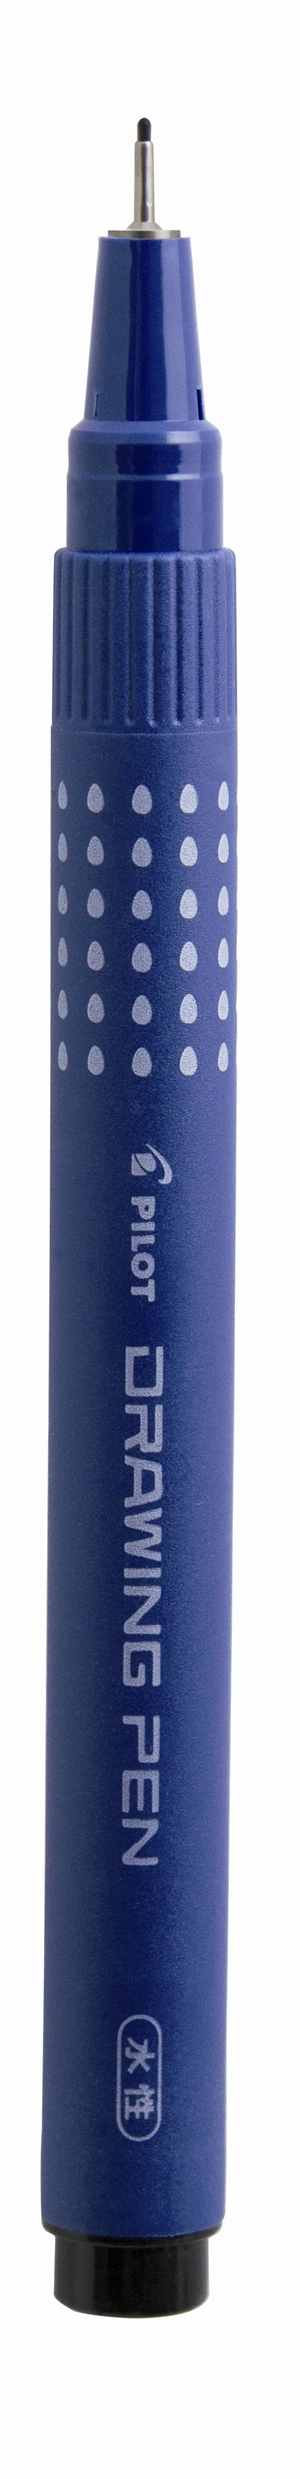 Pilot Feltip Pen with Cap Drawing Pen 0.3mm black.